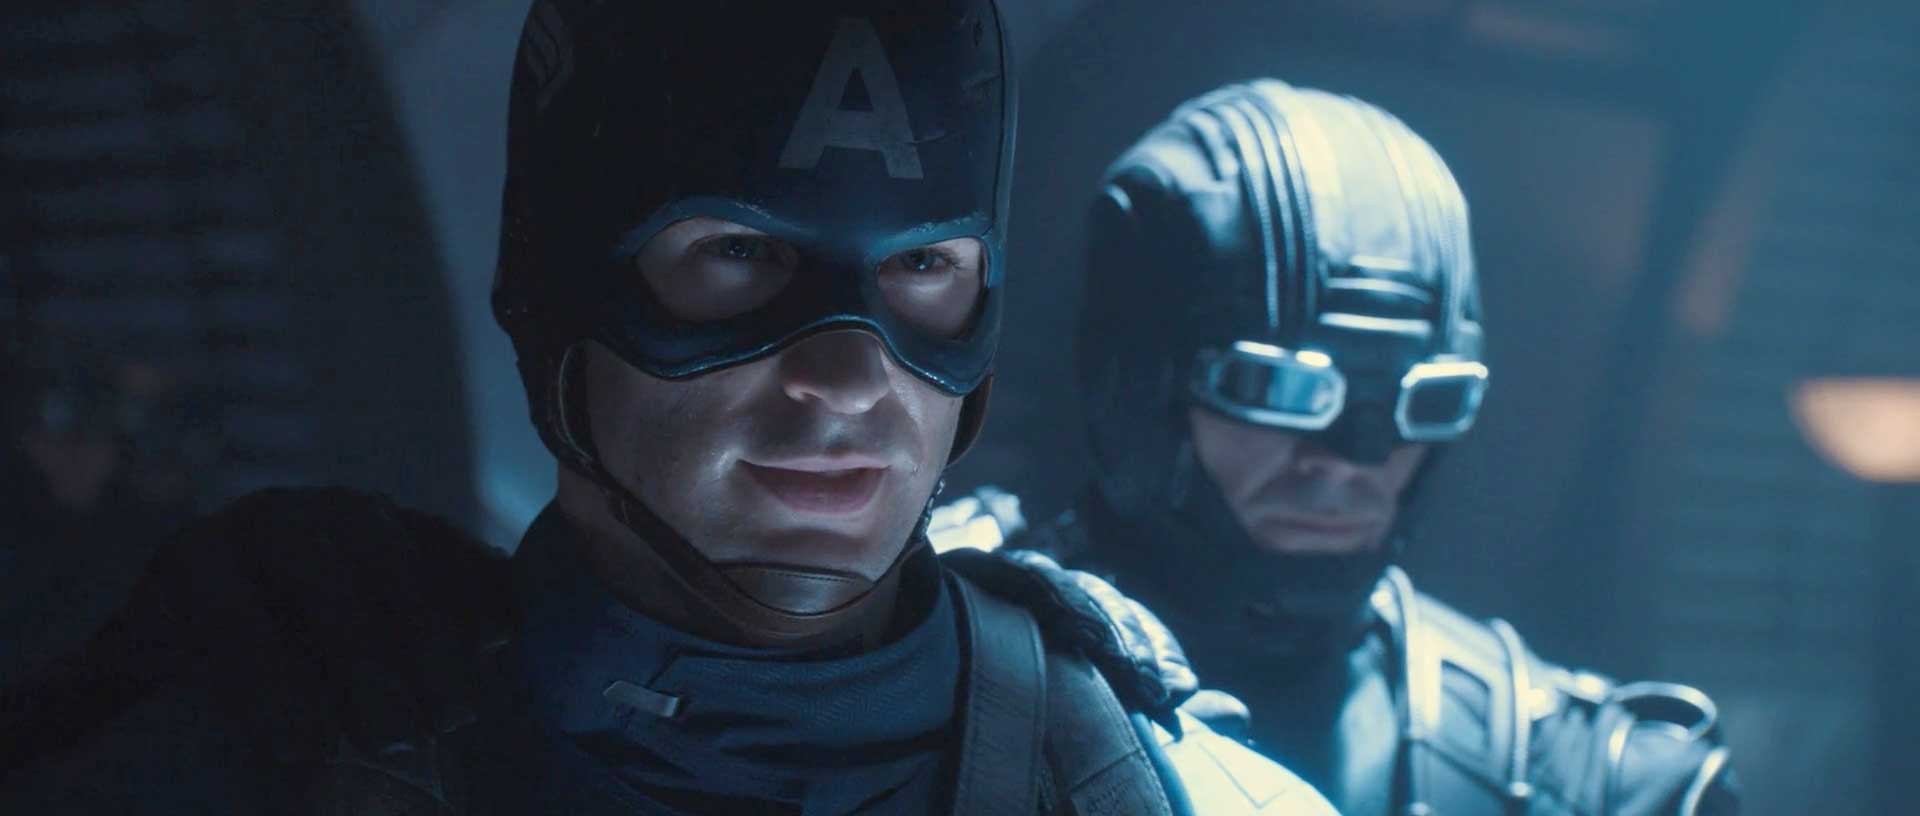 The Road To Avengers Endgame Captain America The First Avenger - Captain America